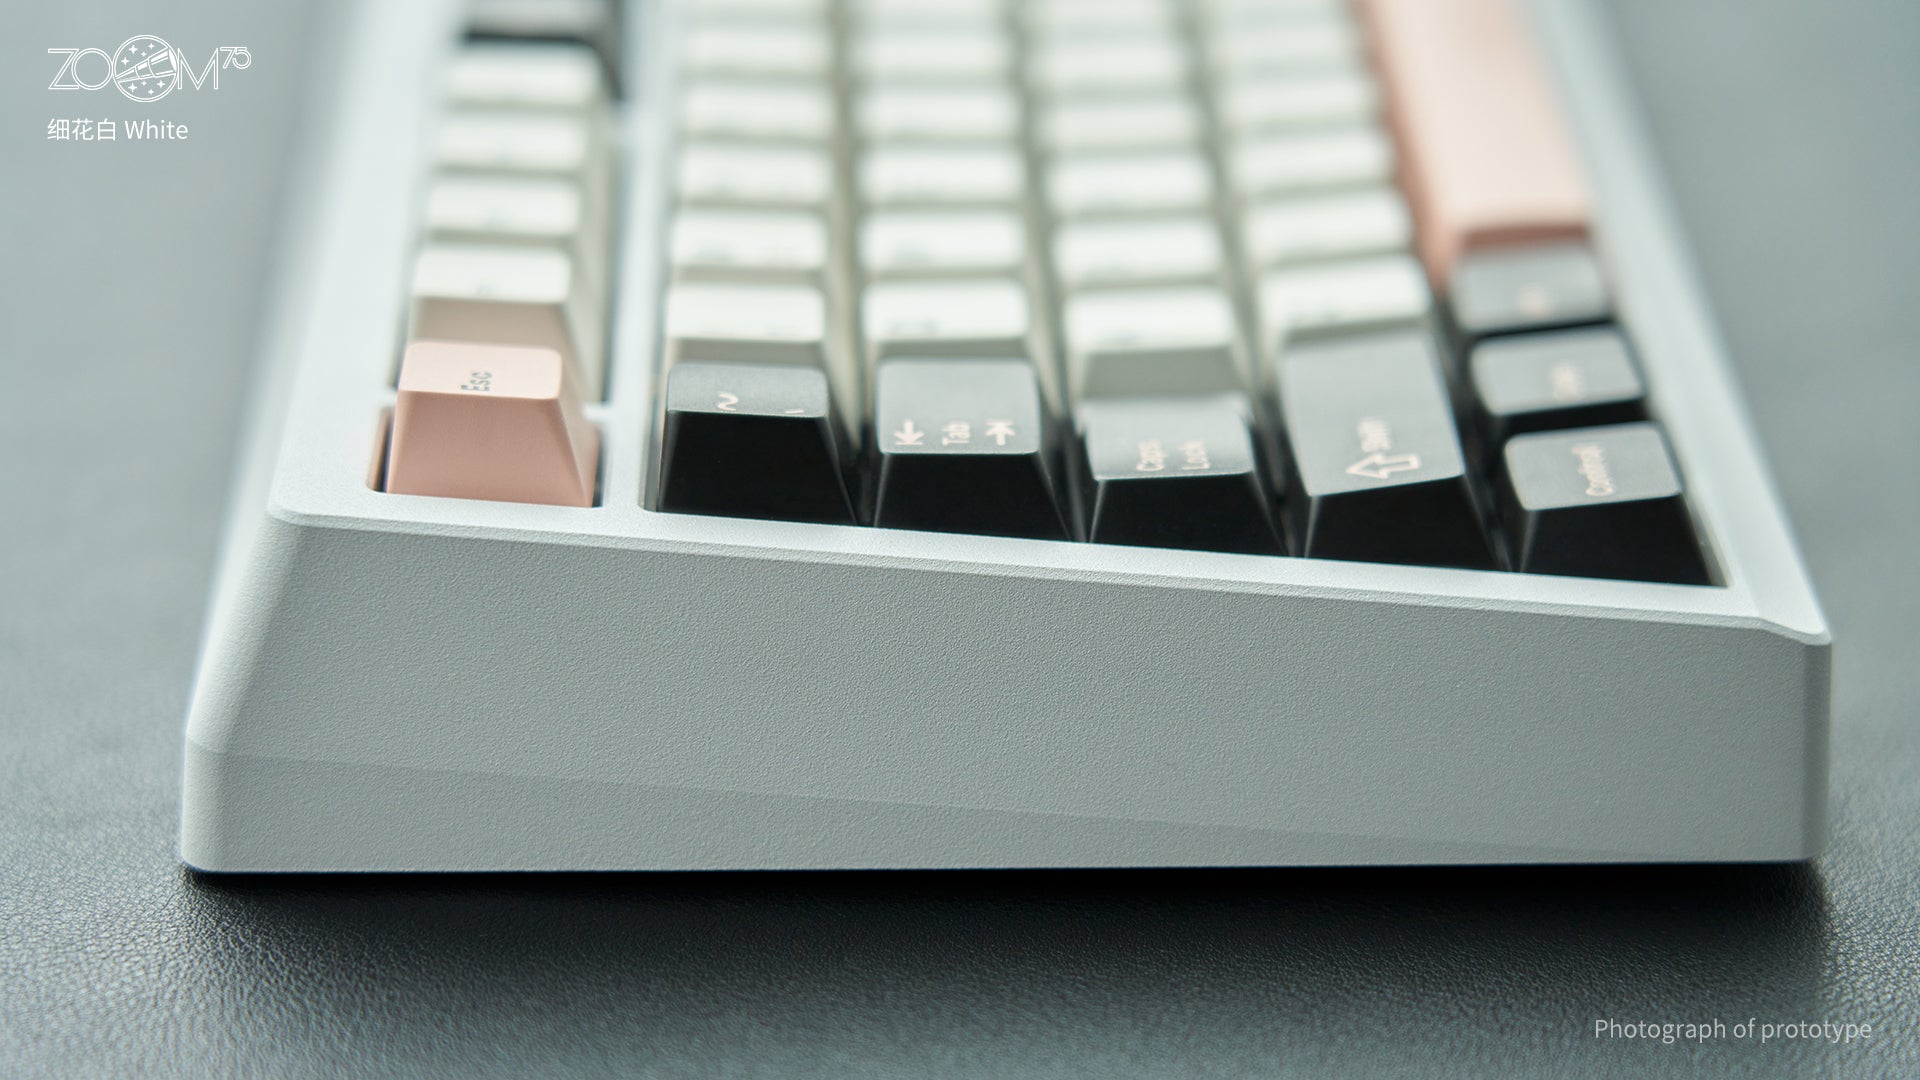 [Preventa] Meletrix Zoom75 Essential Edition (EE) - Barebones Keyboard Kit - White